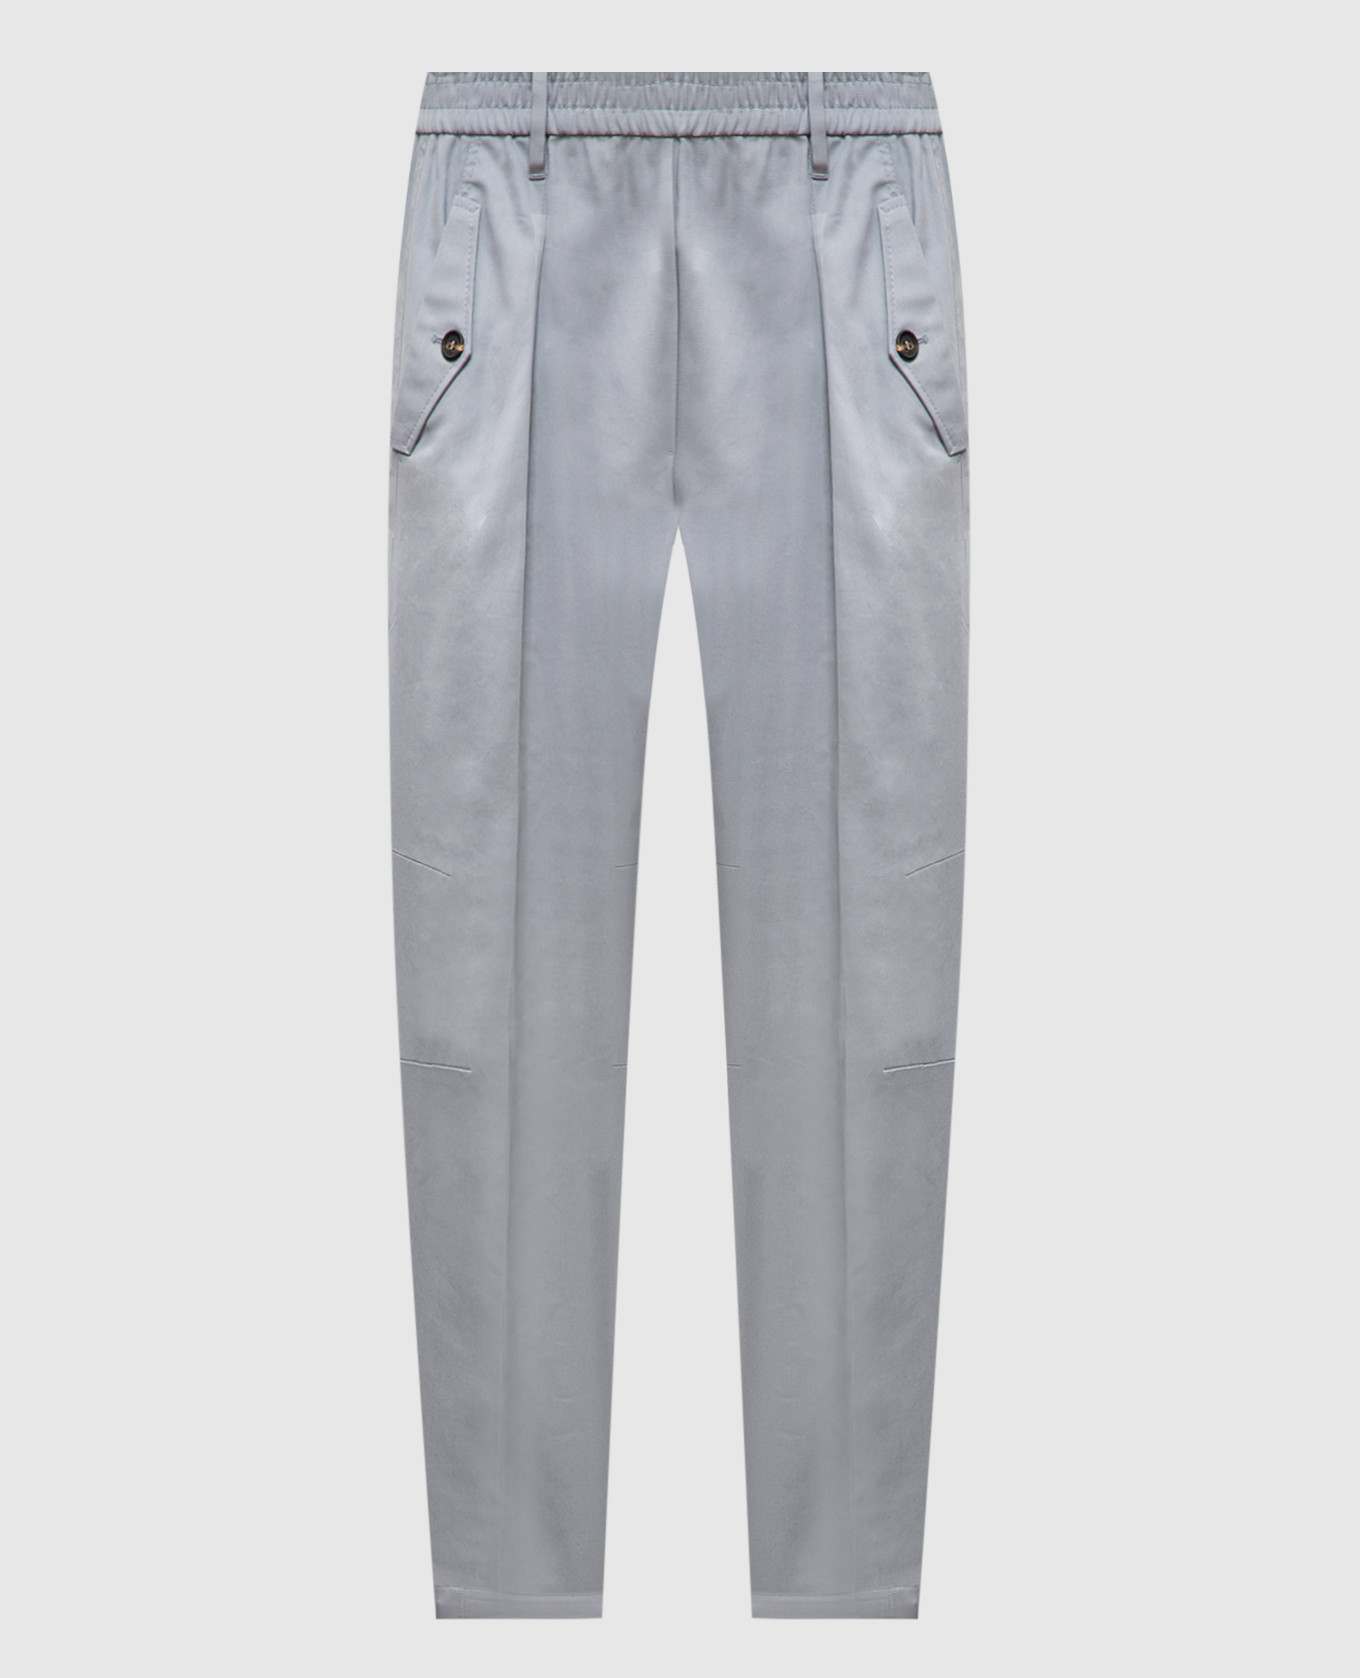 Gray pants with monil chain